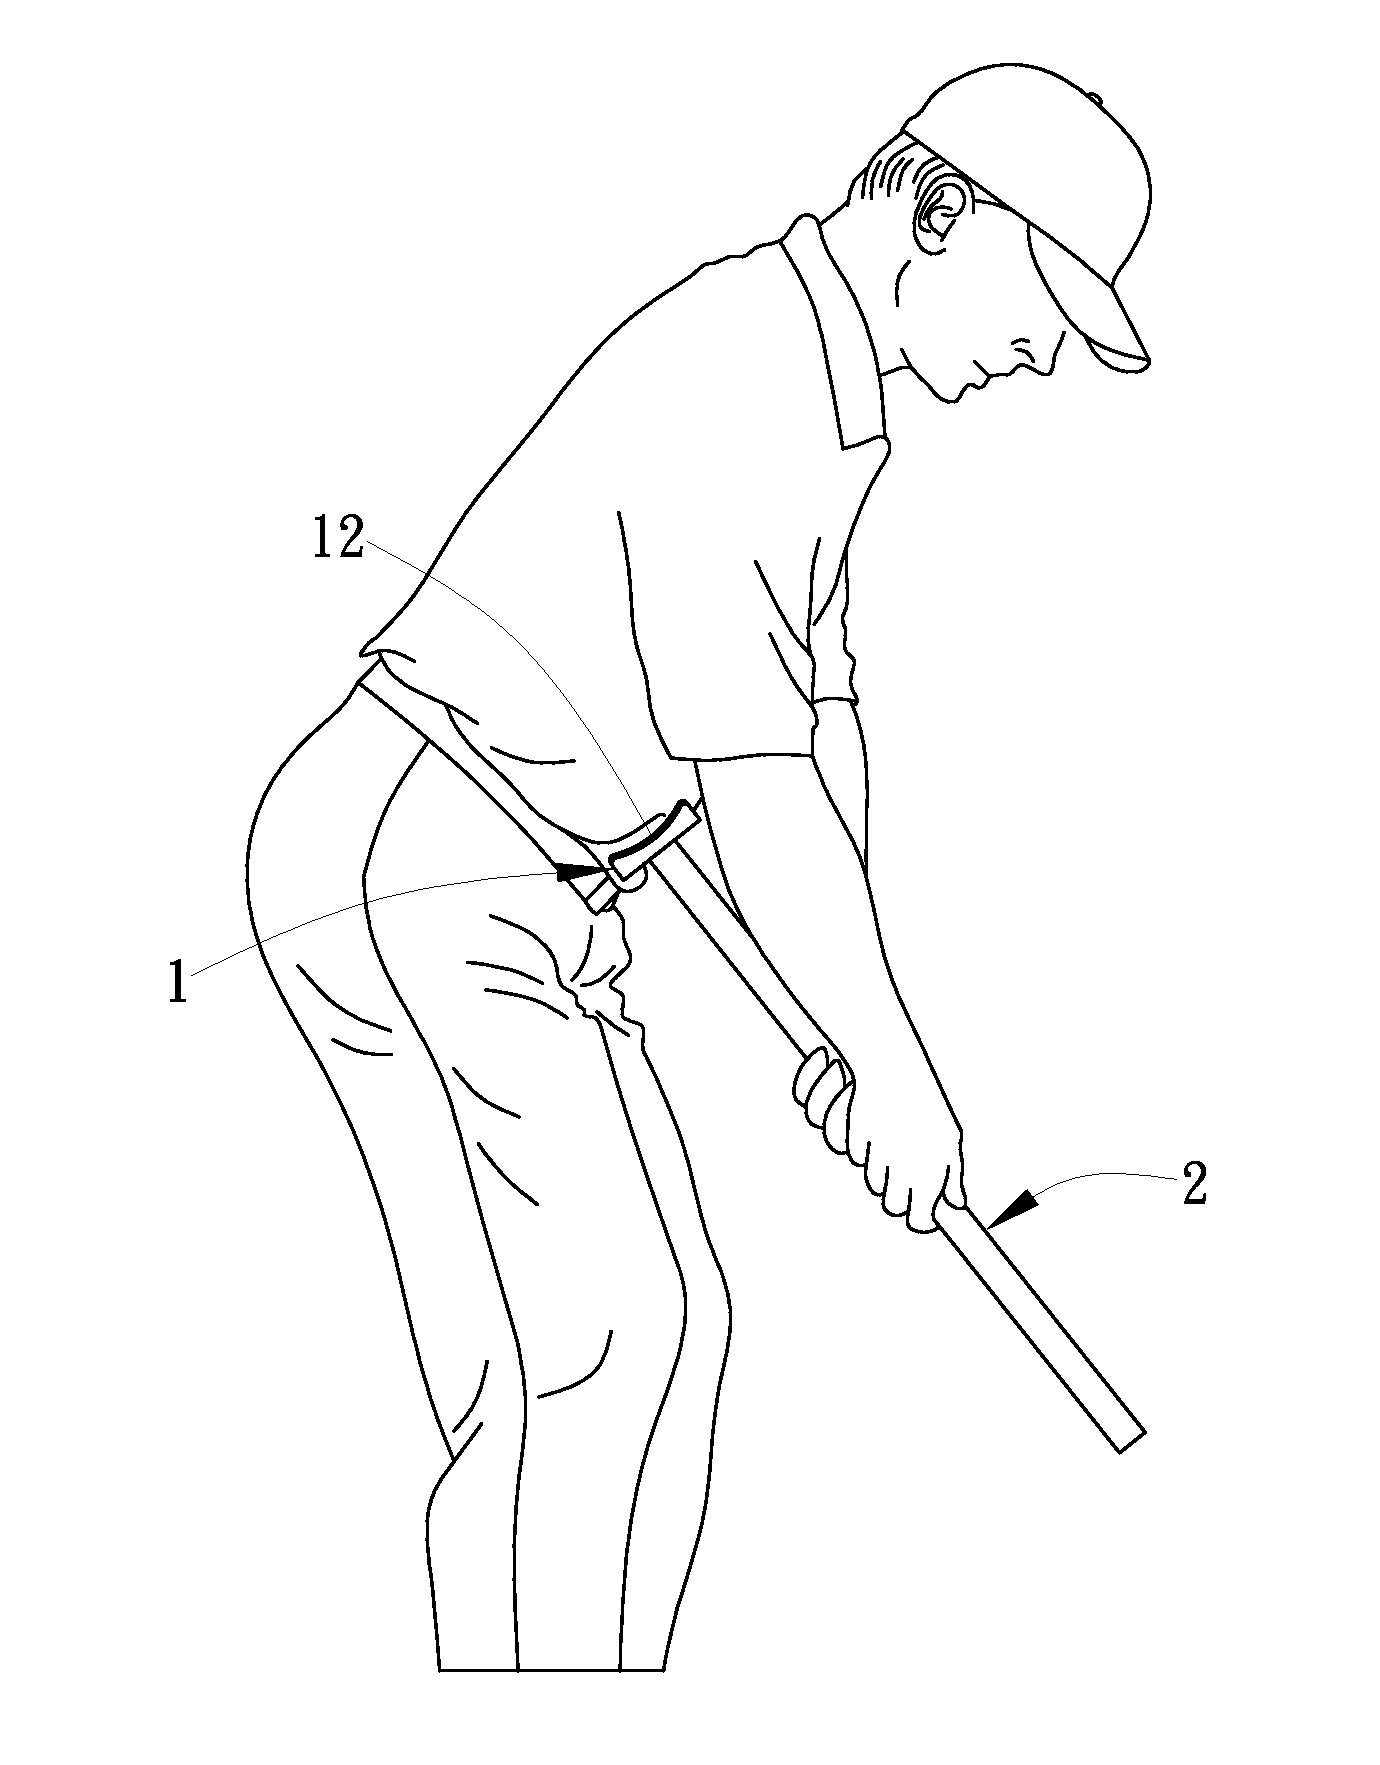 Golf swing/putting trainer